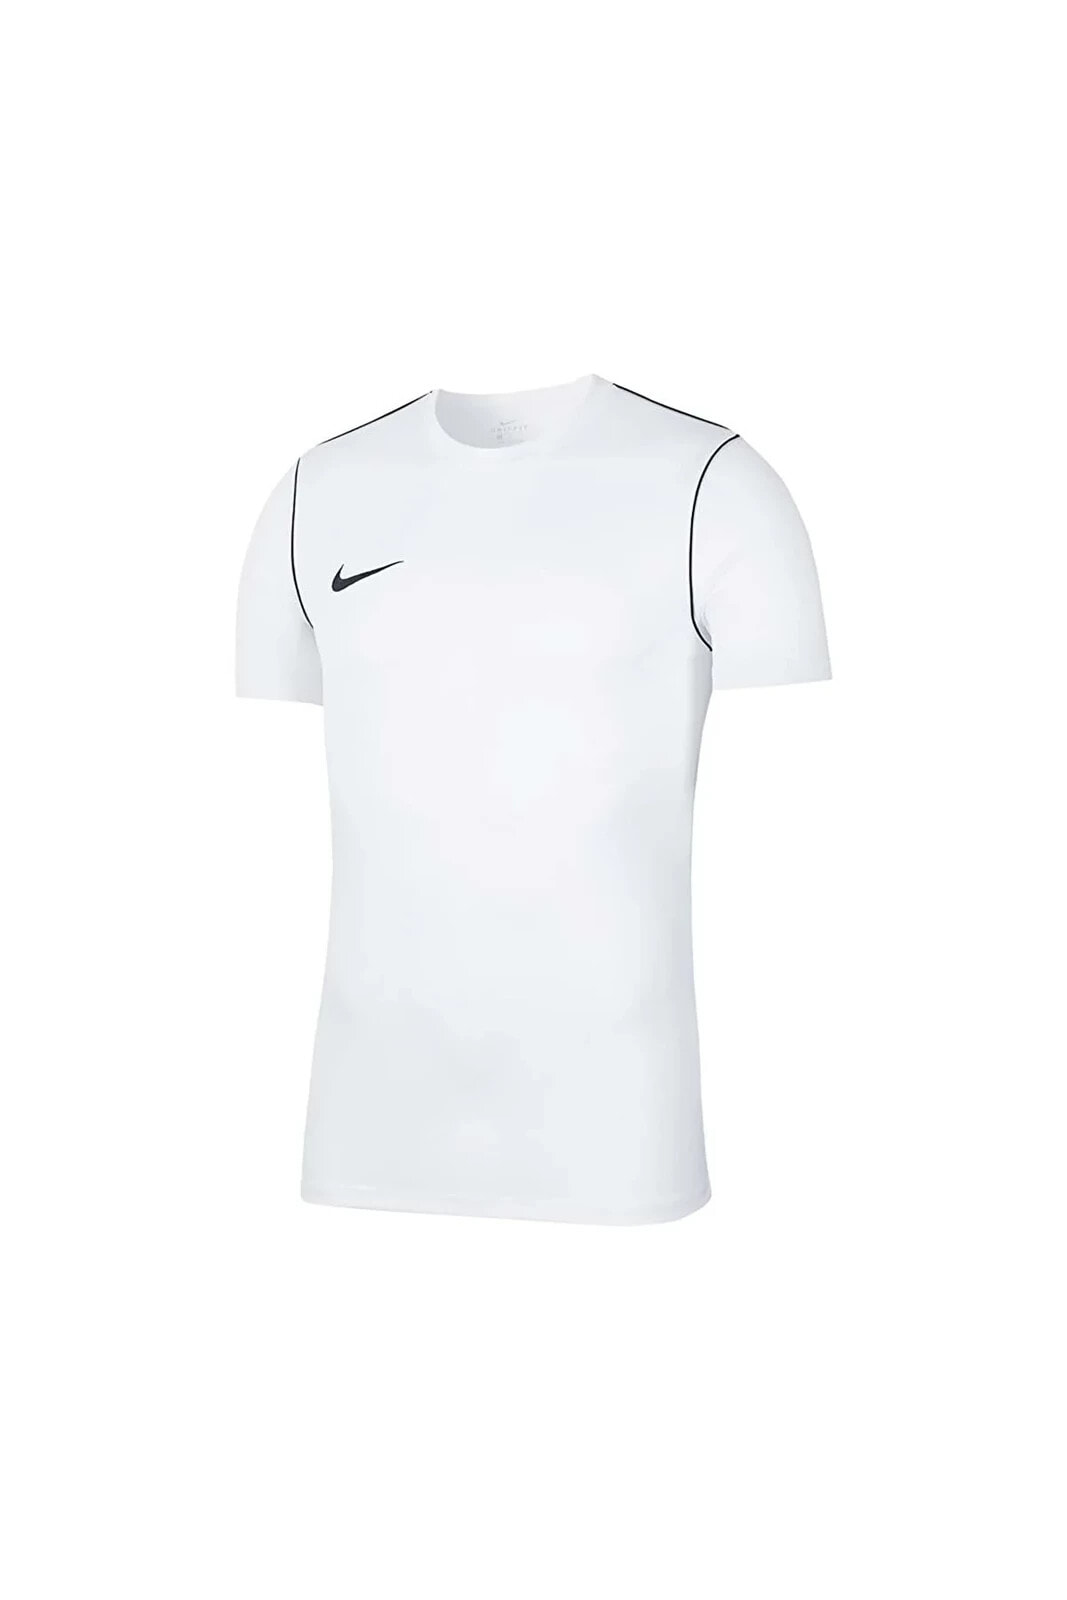 Bv6883-100 Dri-fit Park Polo Tişört Erkek Futbol Forması Beyaz